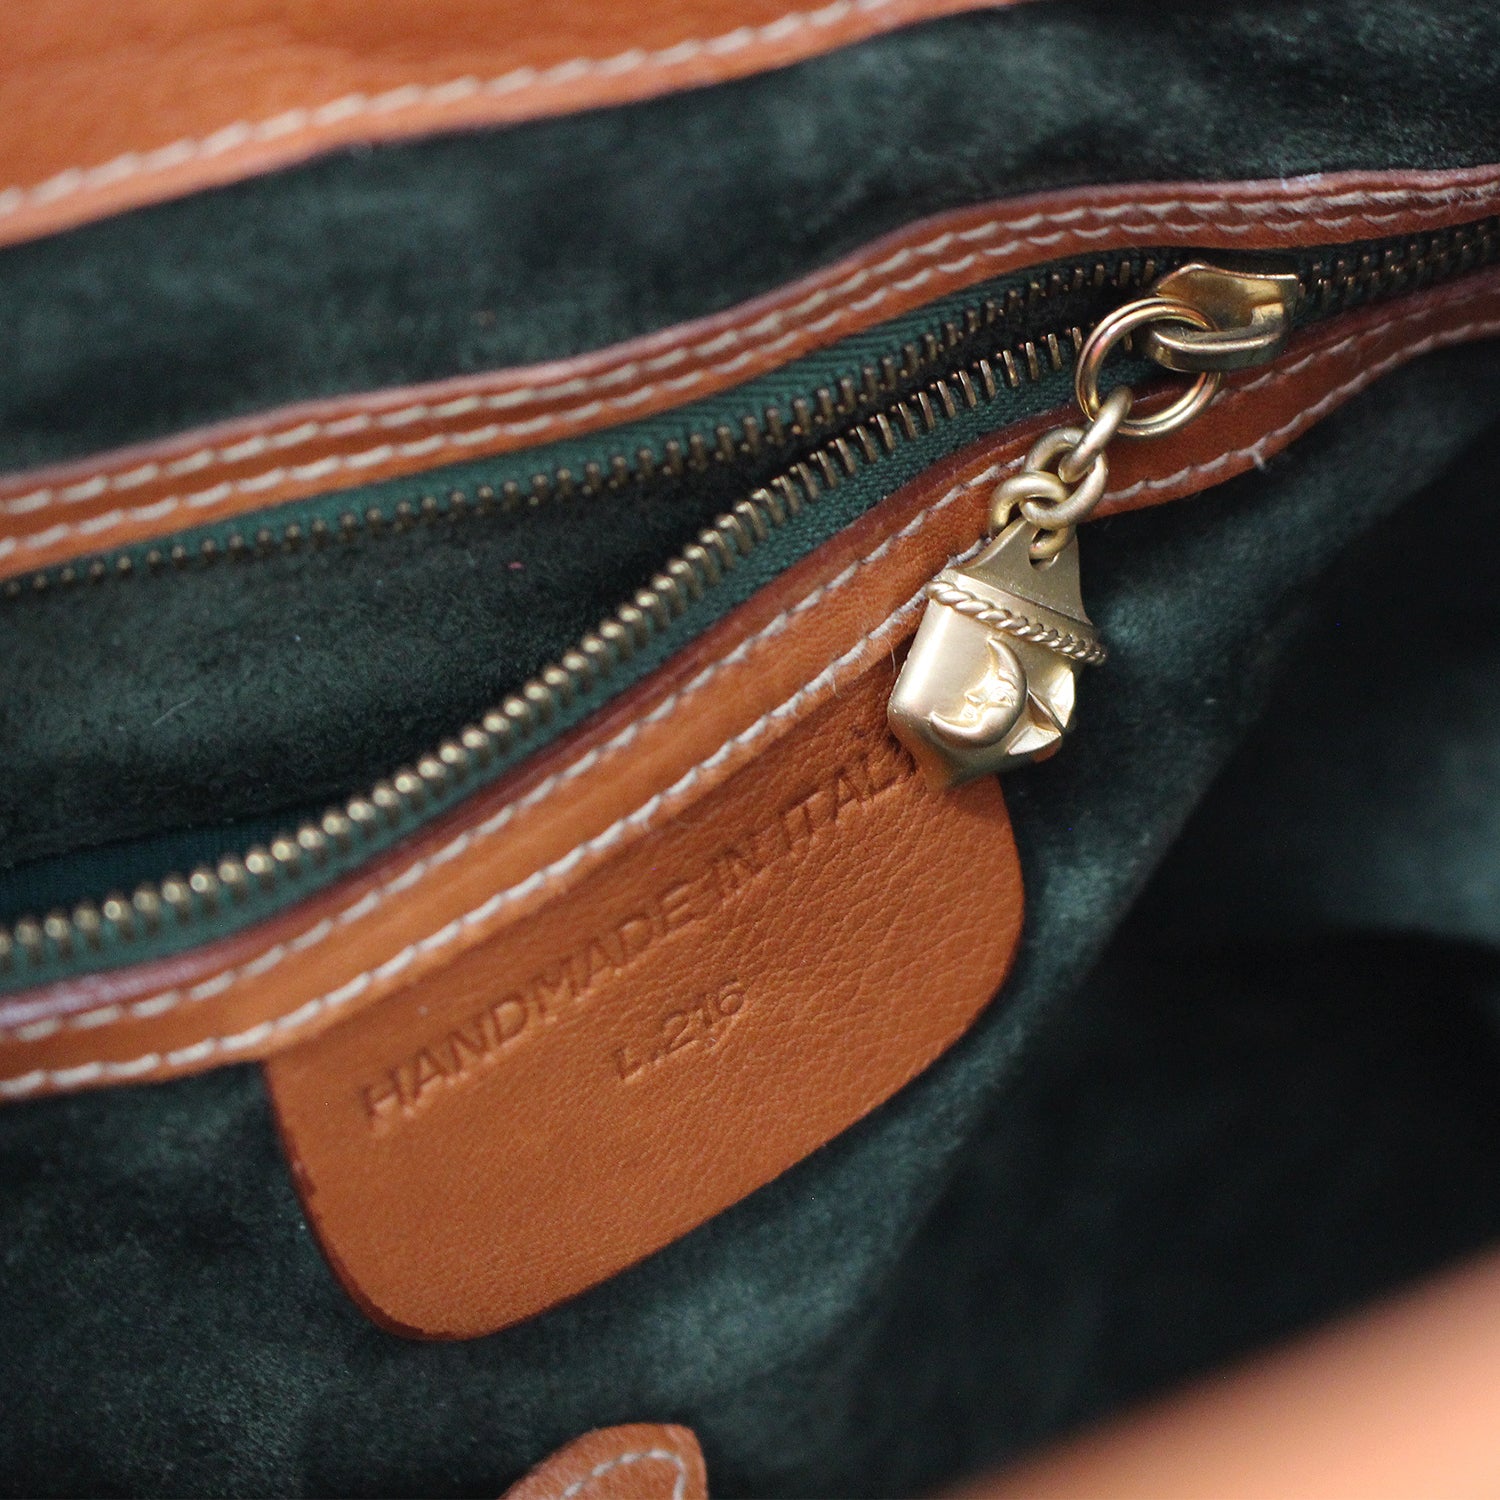 Barry Kieselstein-Cord | Purse | American | The Metropolitan Museum of Art  | Leather bag design, Trending handbag, Purses